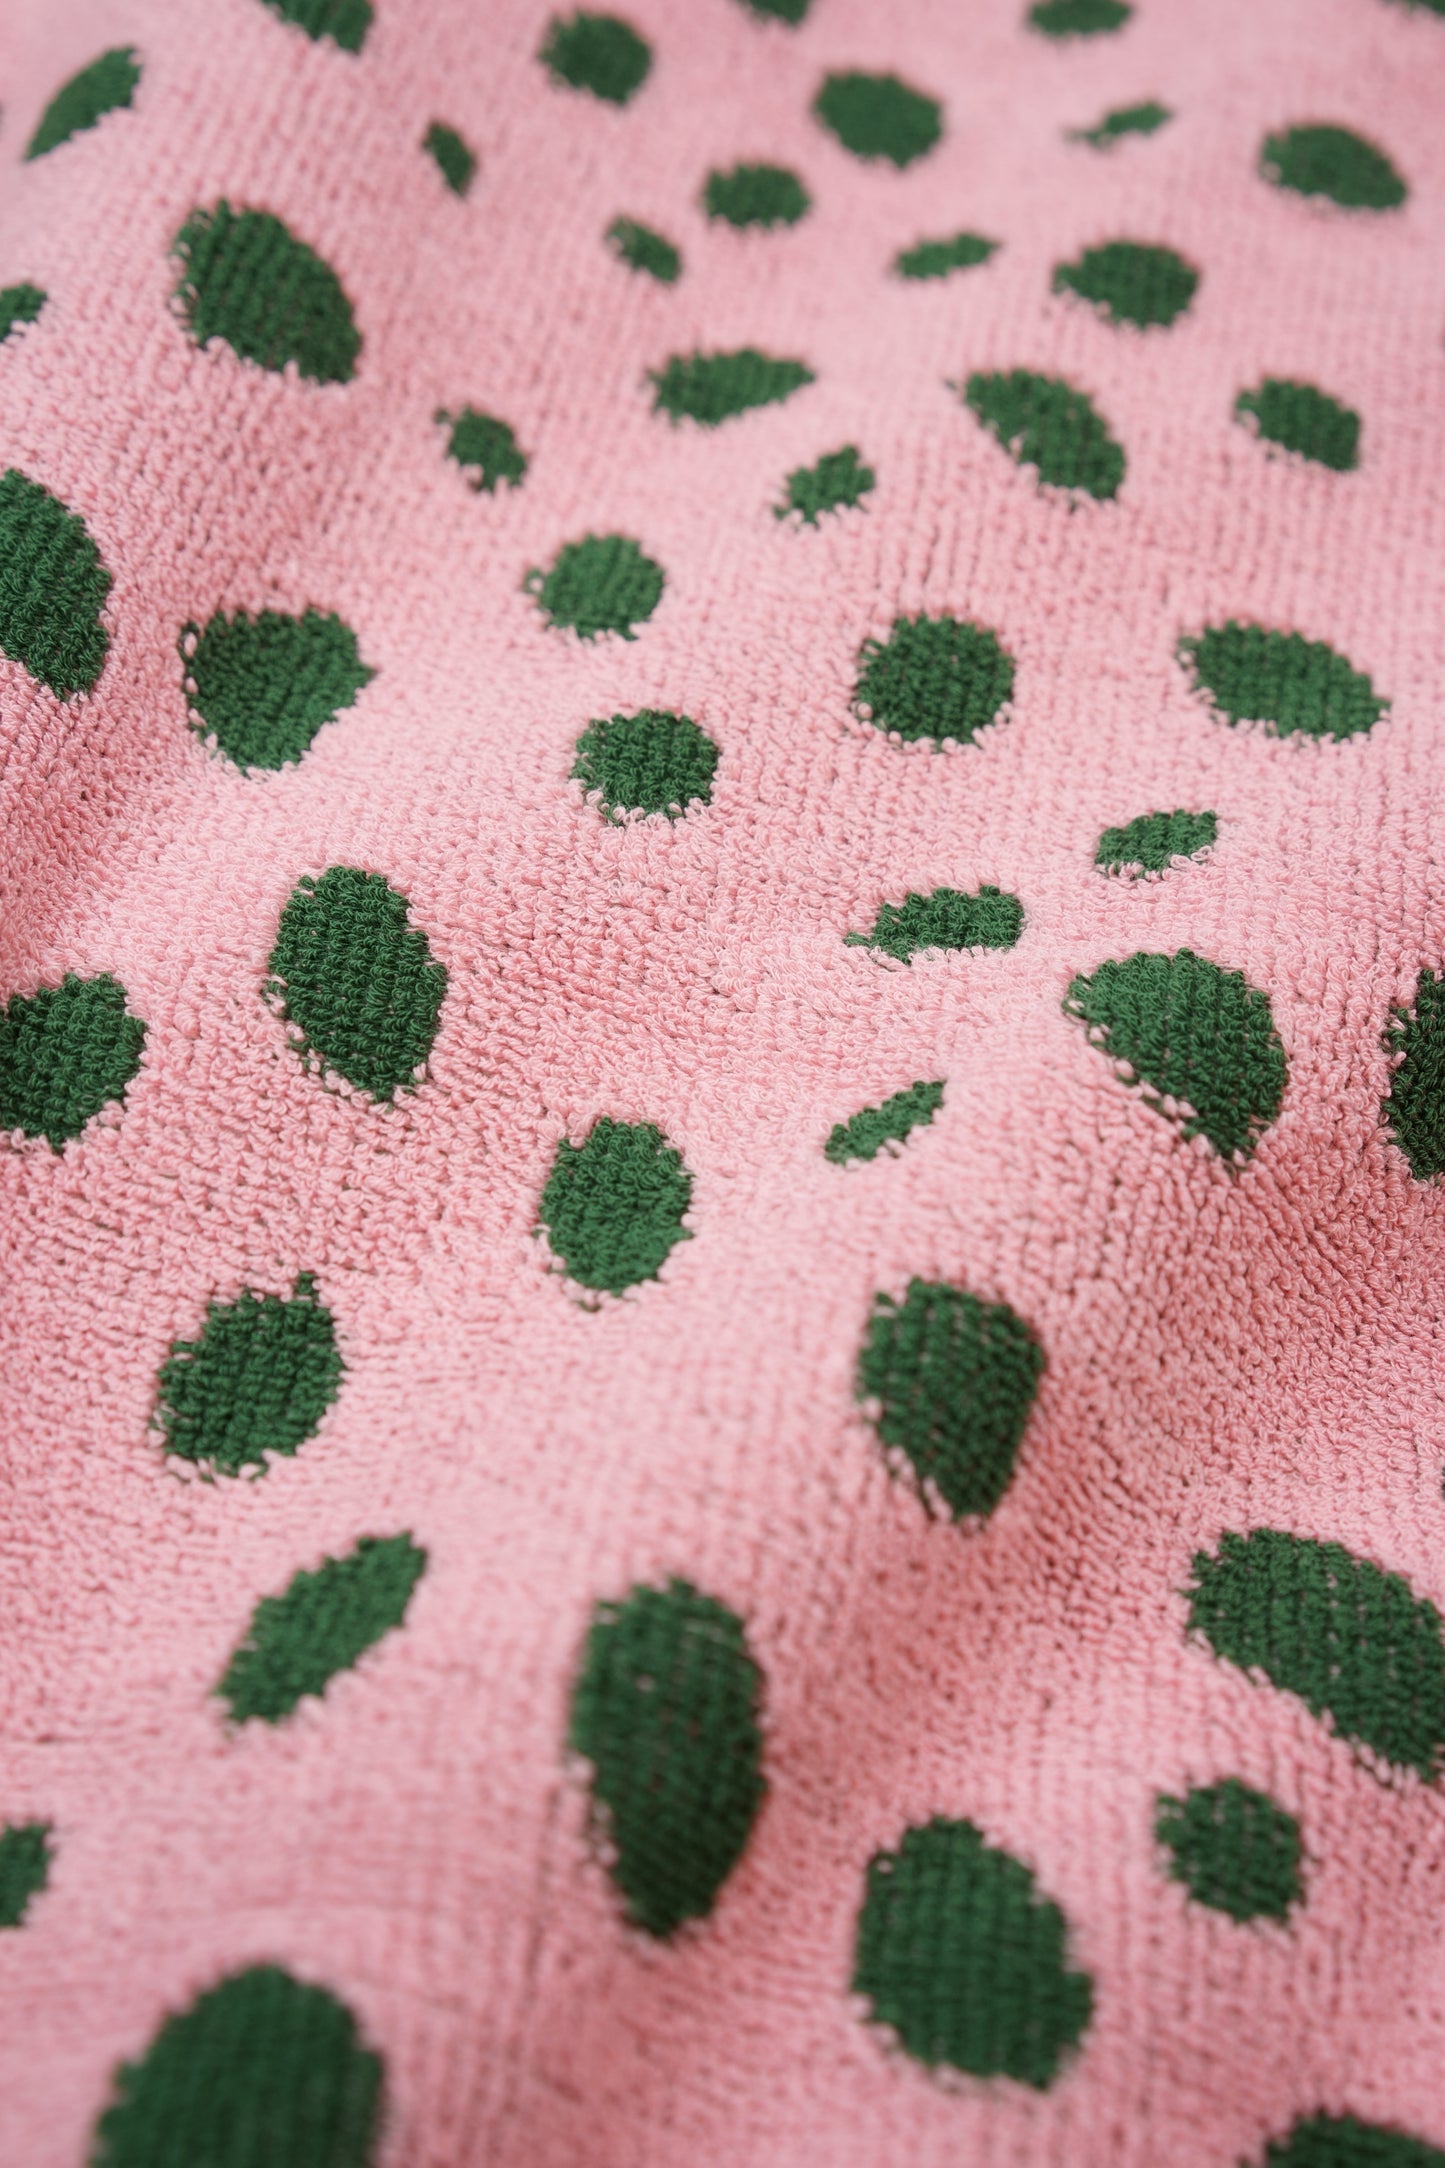 Pebbles Gym Towel | Pink & Green